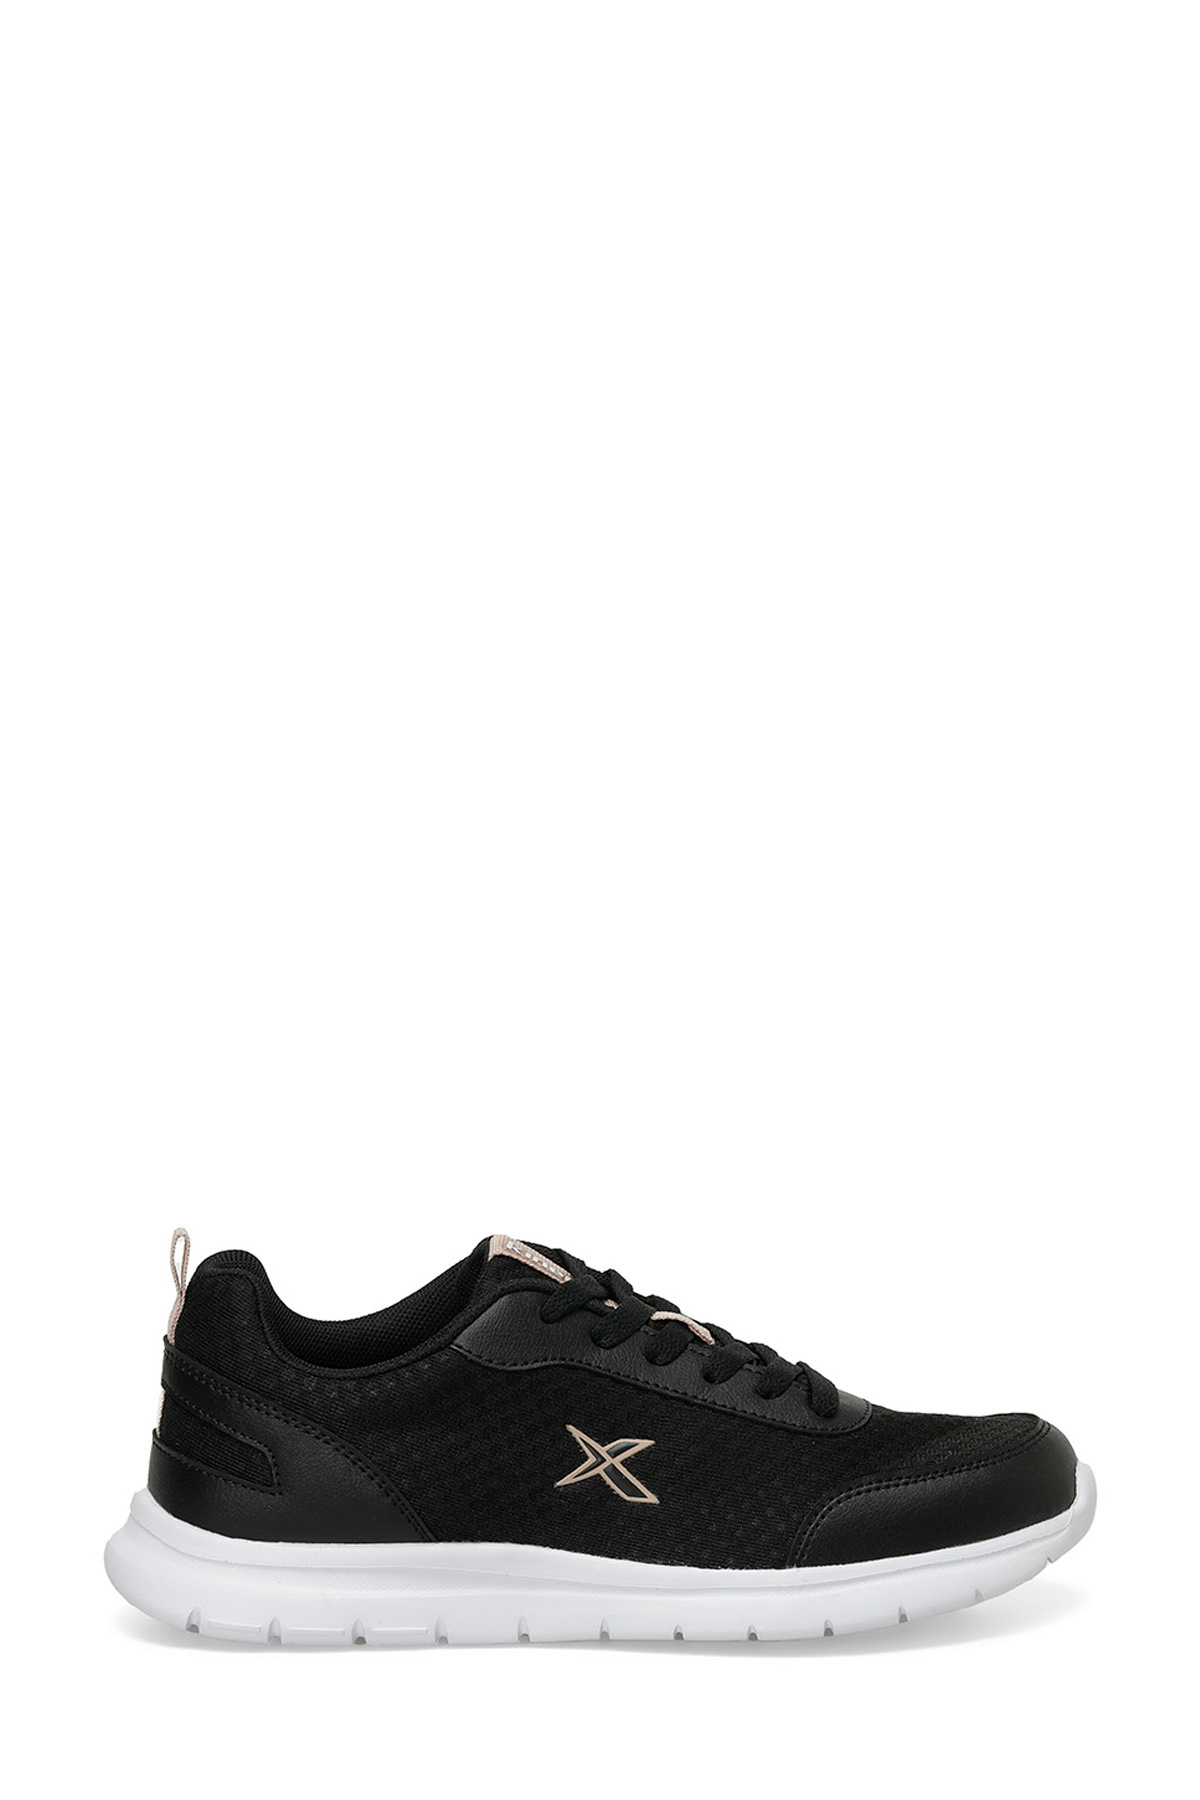 Levně KINETIX LENA TX W 4FX Women's Black Running Shoe